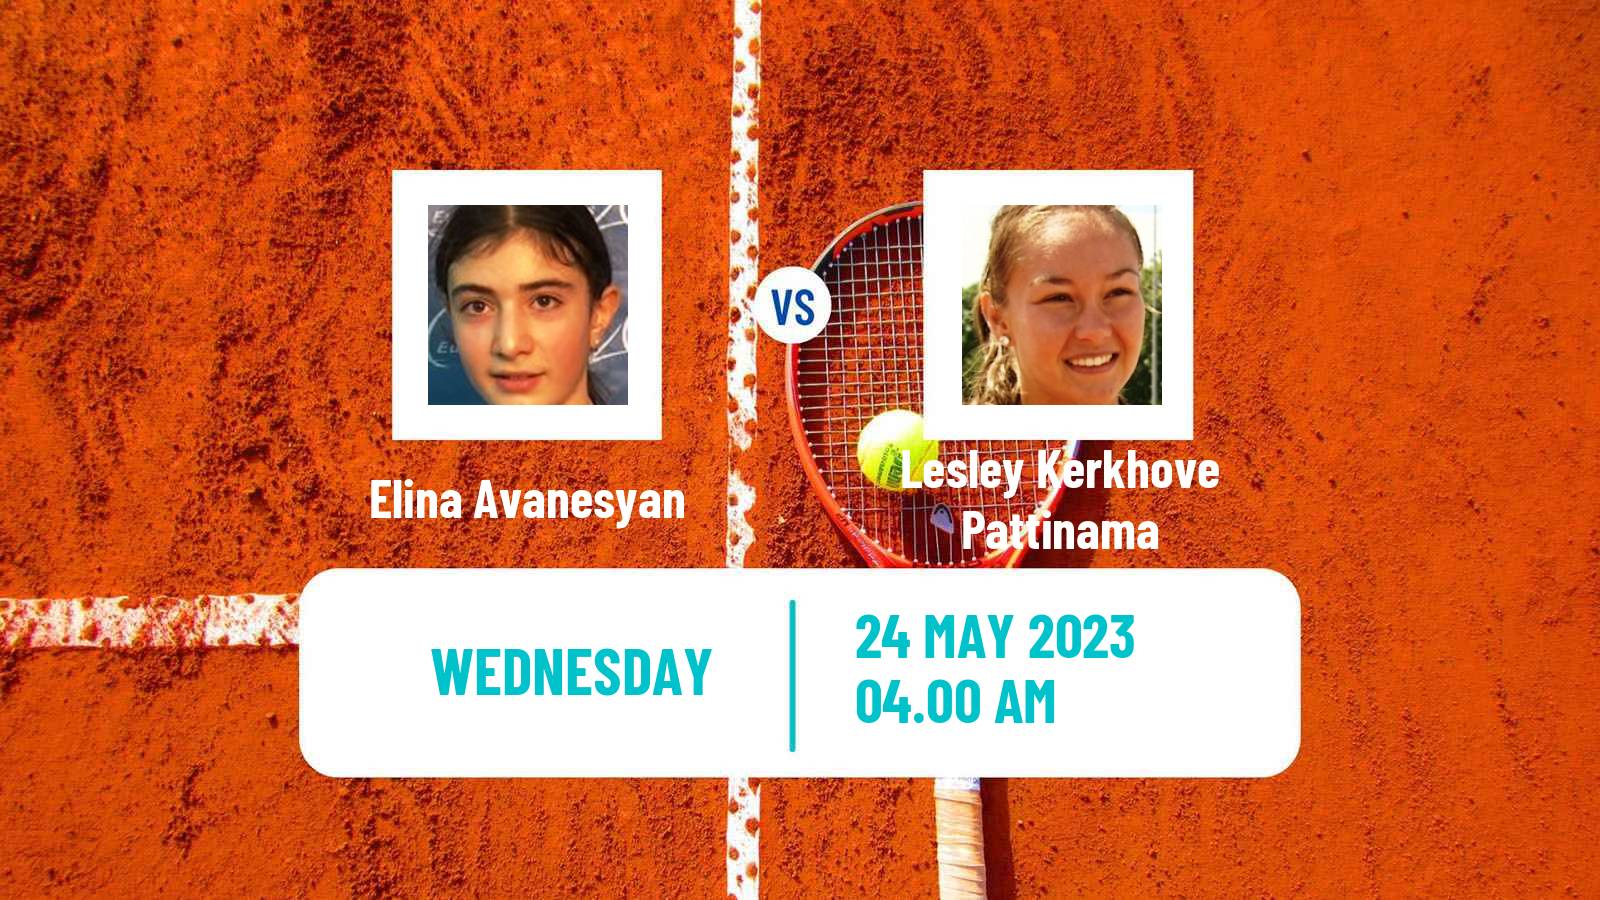 Tennis WTA Roland Garros Elina Avanesyan - Lesley Kerkhove Pattinama